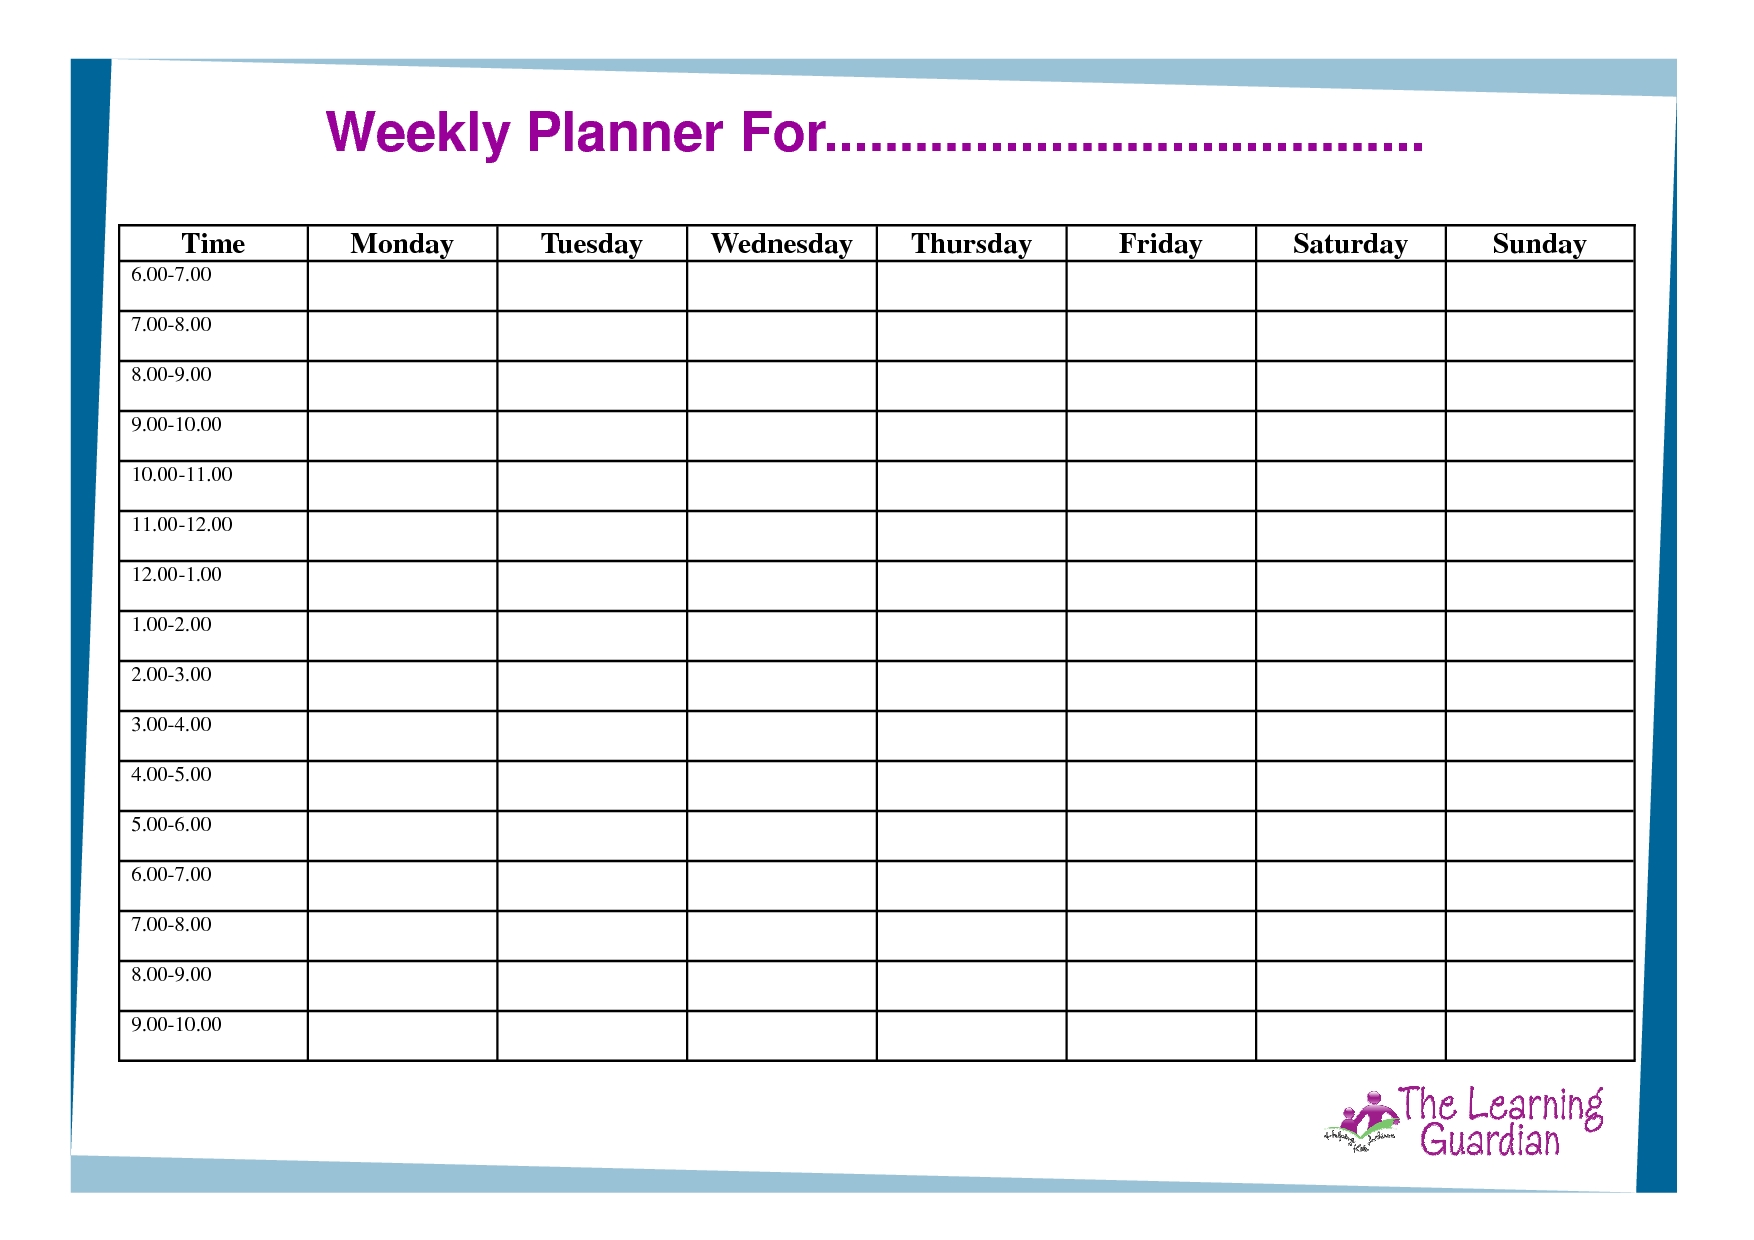 Free Printable Weekly Calendar Templates | Weekly Planner For Time for Free Online Printable Weekly Calendar